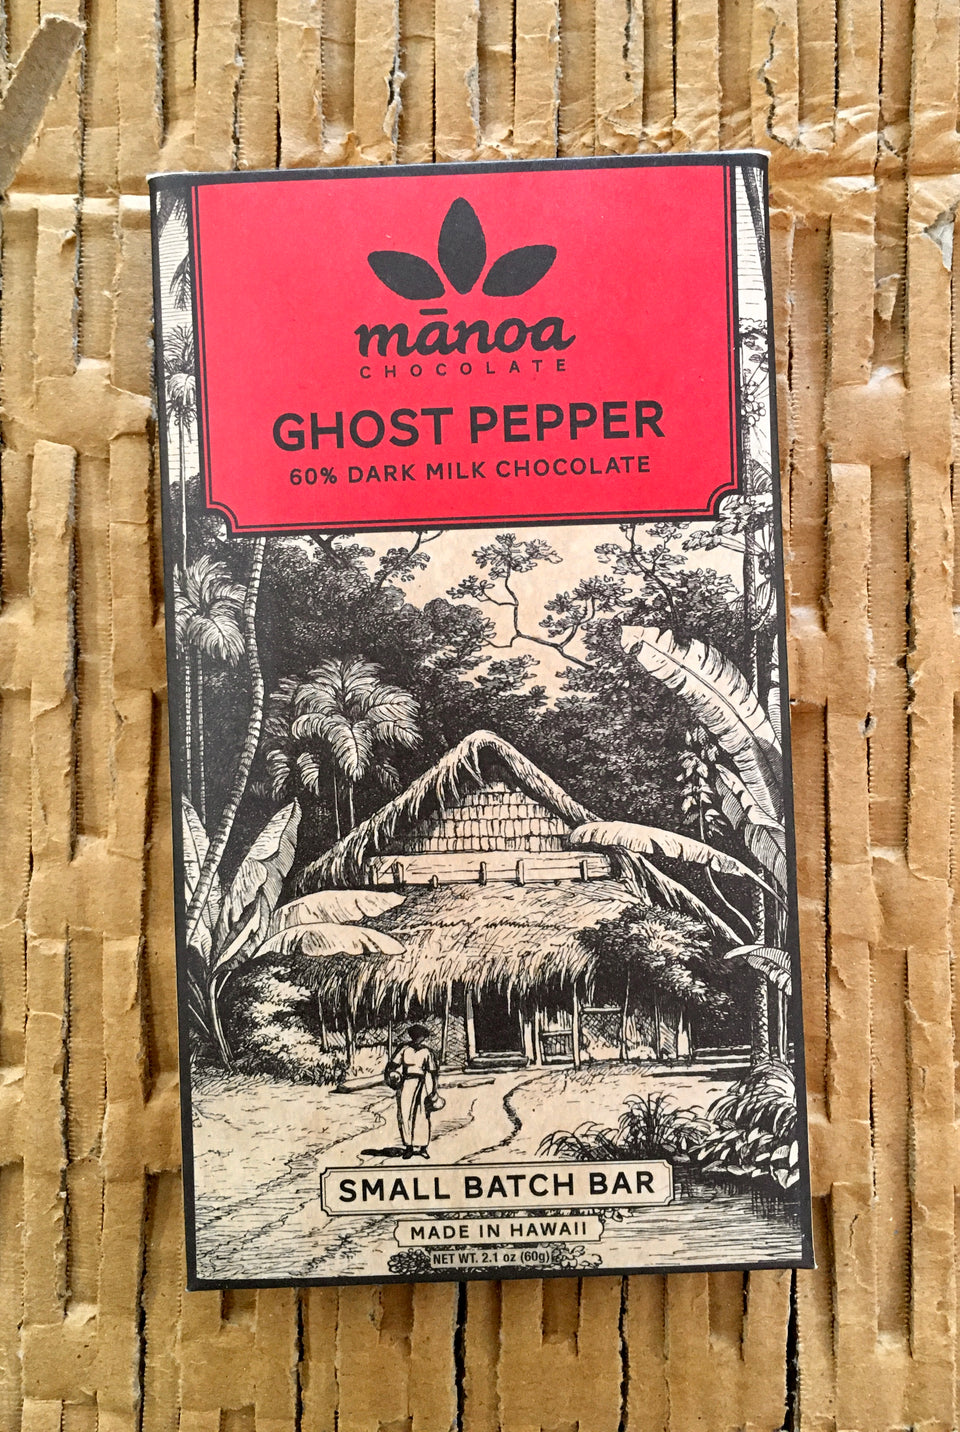 Ghost pepper bar